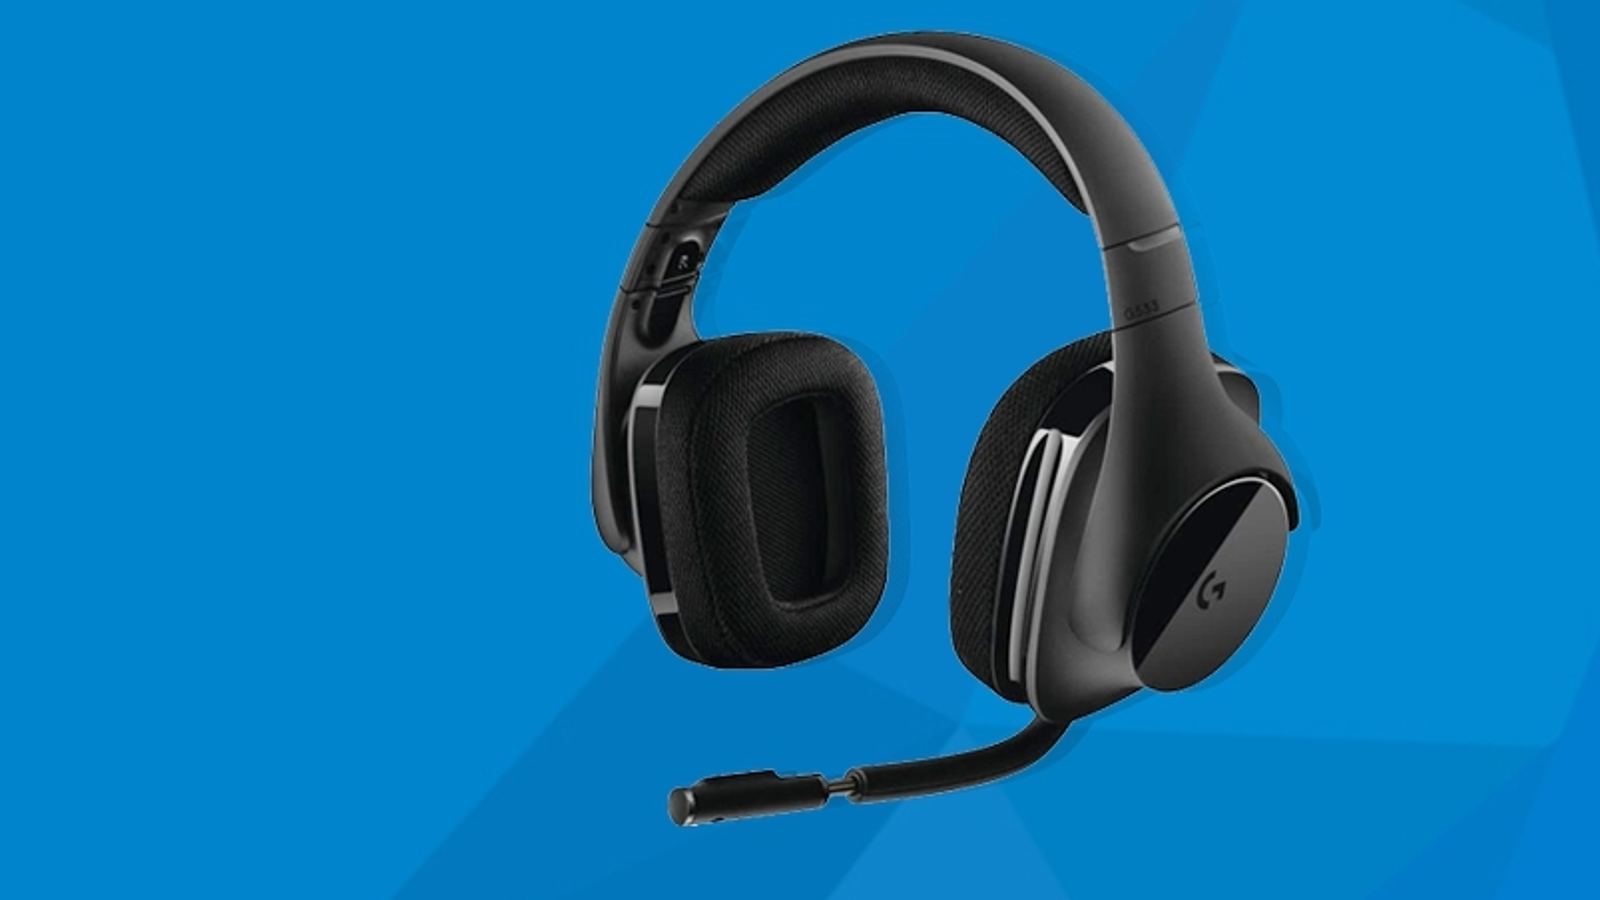 Logitech headset with surround sound for under £70 Eurogamer.net